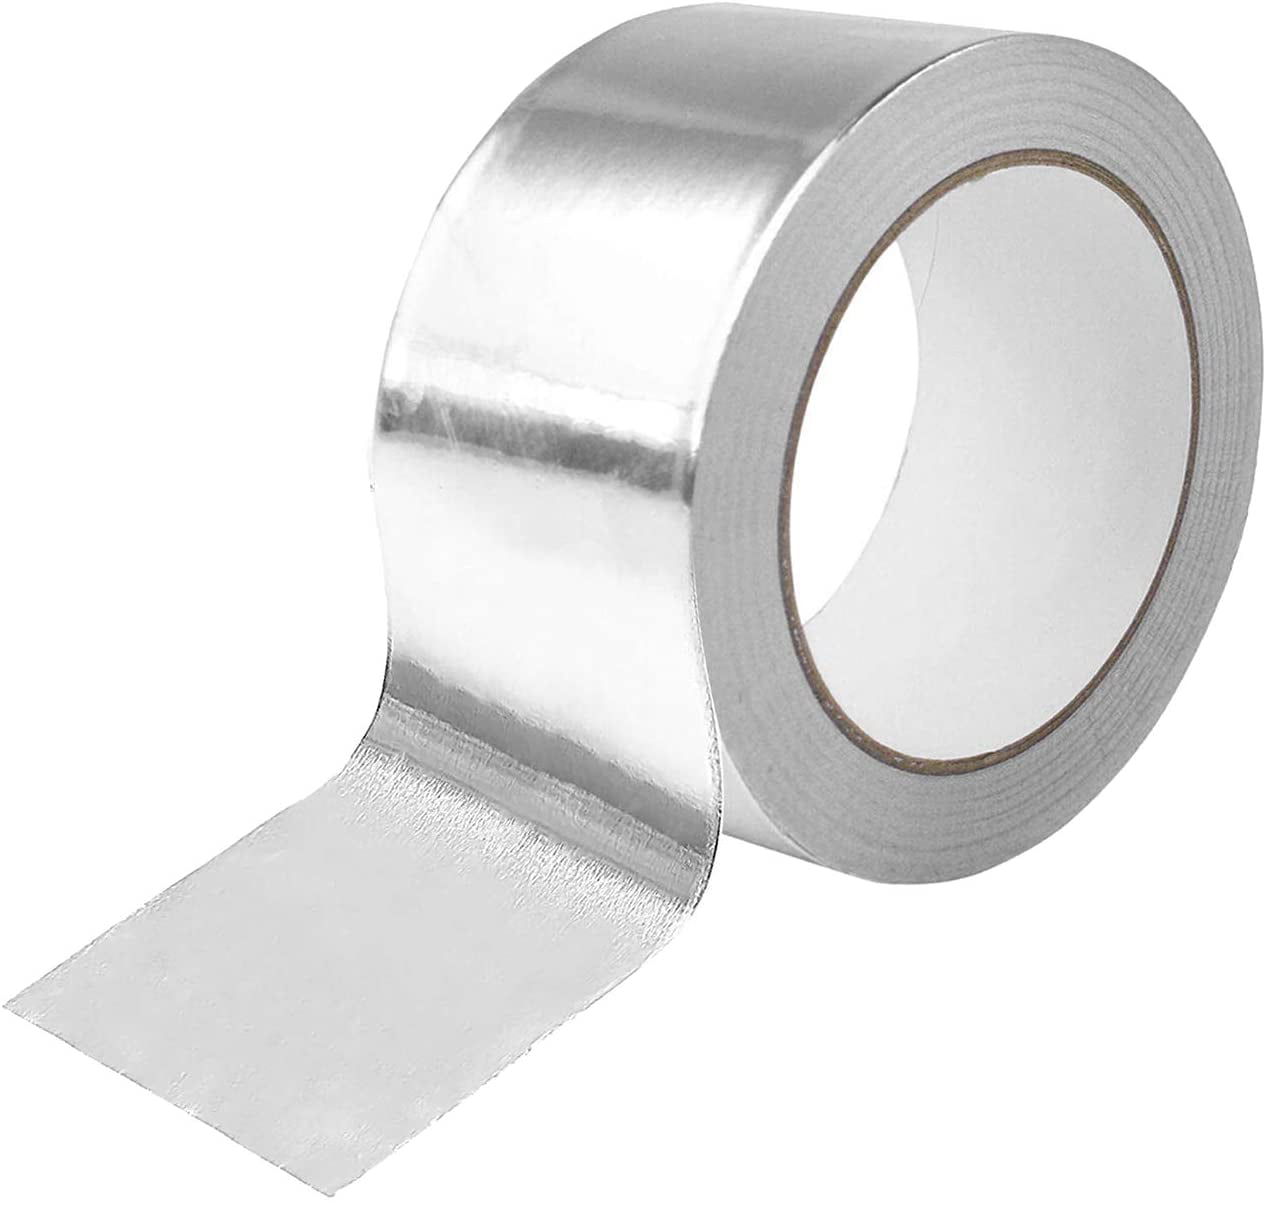 Aluminium Foil Tape Dryers SUPERTOOL Aluminium Foil Adhesive Tape Rolls for HVAC Repair Jewelry Making & Crafts 10mm x 50m Ducts